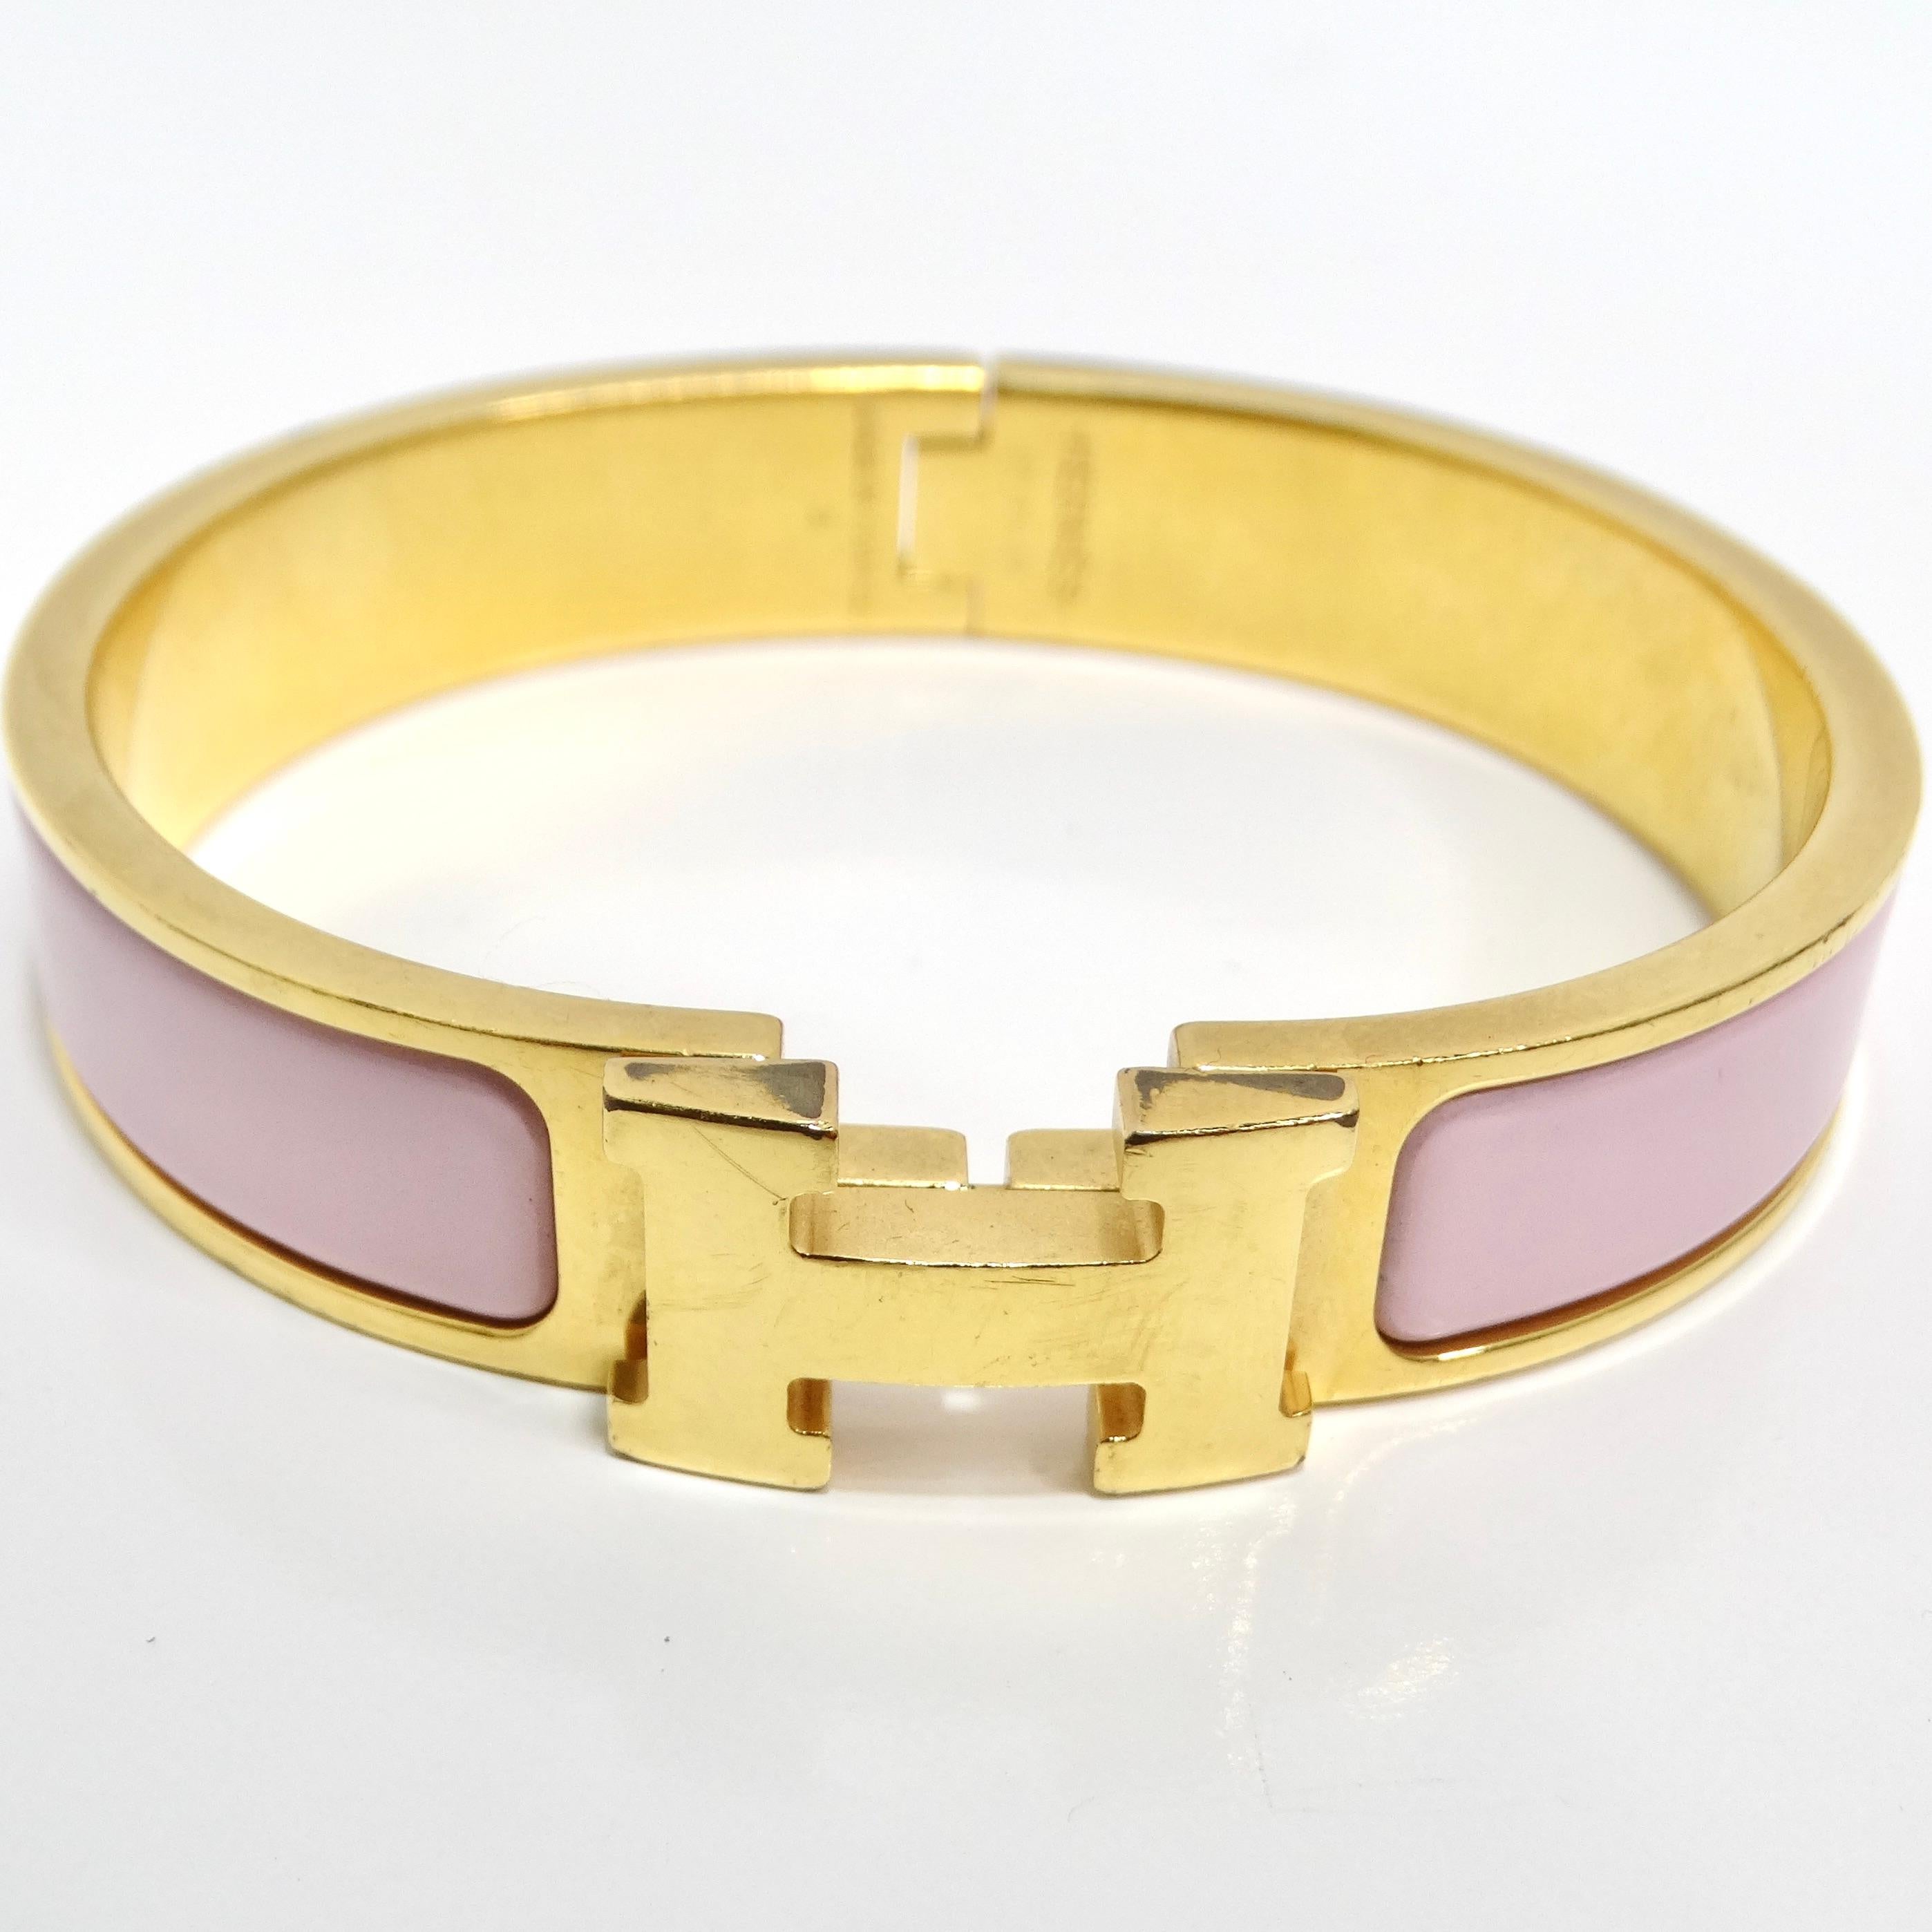  Hermes Narrow Enamel Clic Clac Bracelet Light Pink Unisexe 